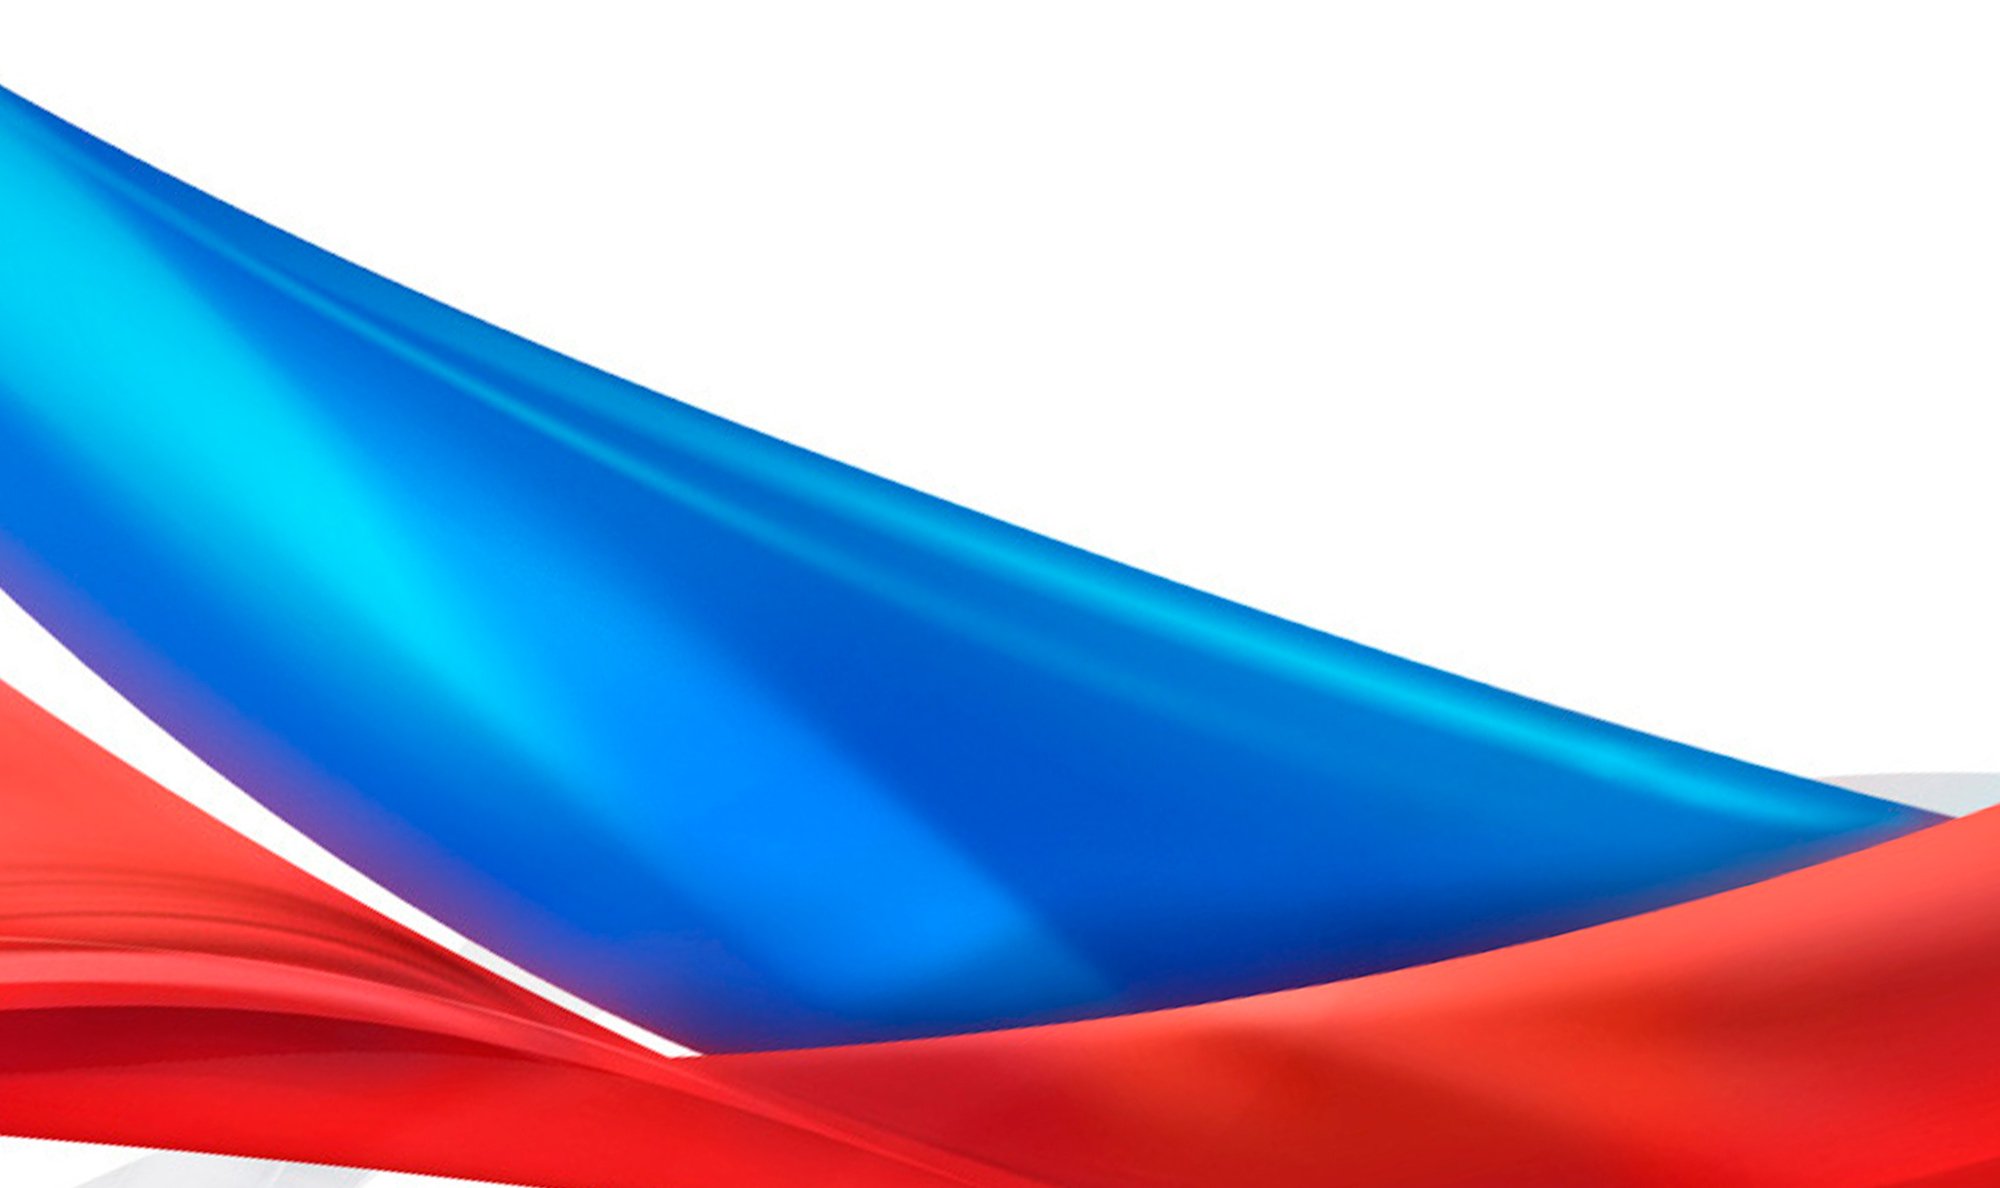 Фон для презентации флаг россии